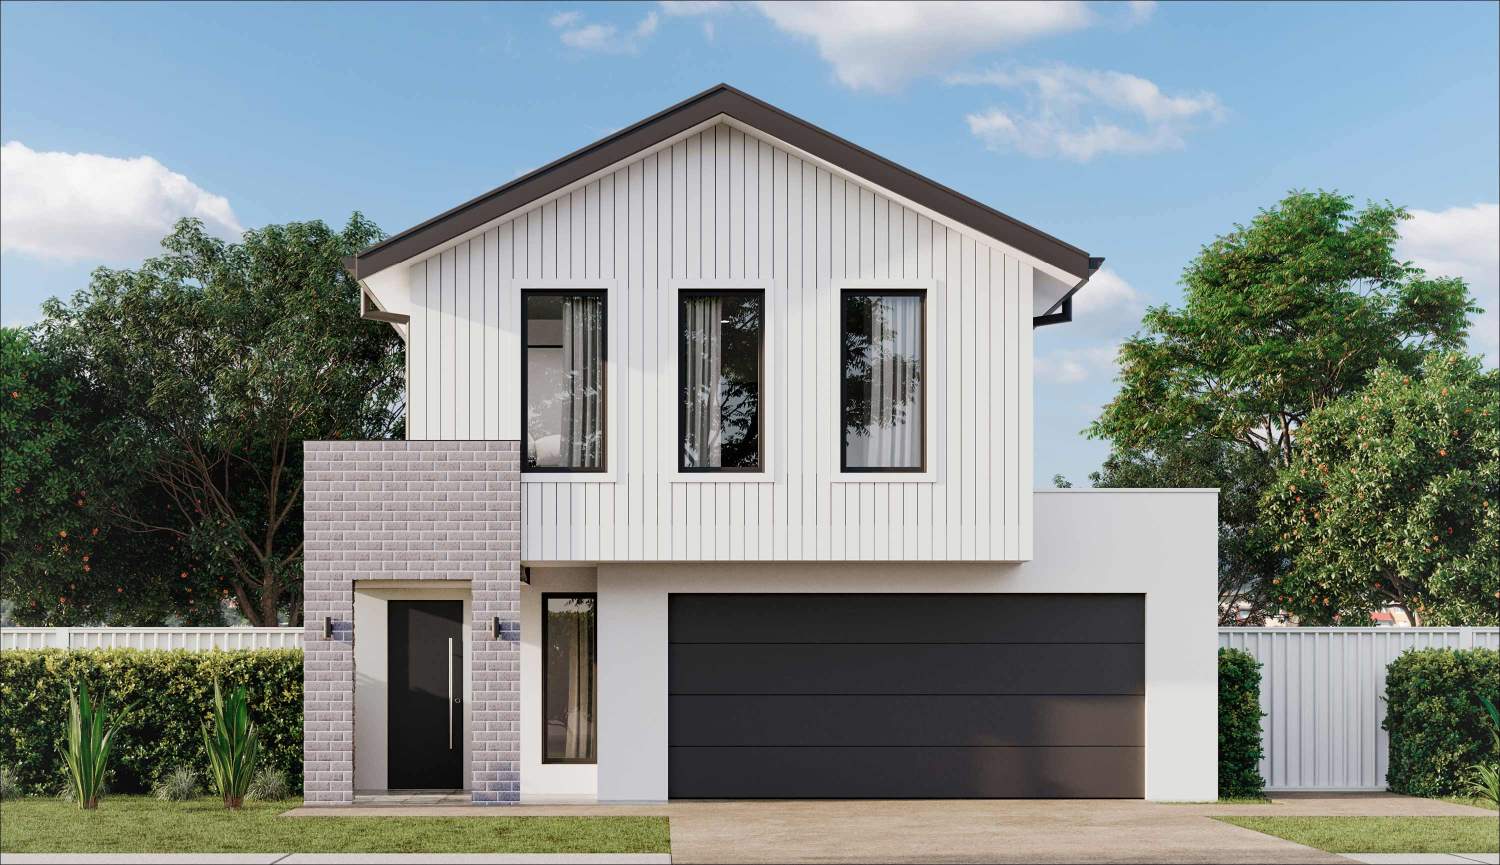 Morphett-two-storey-home-design-scandinavian-facade